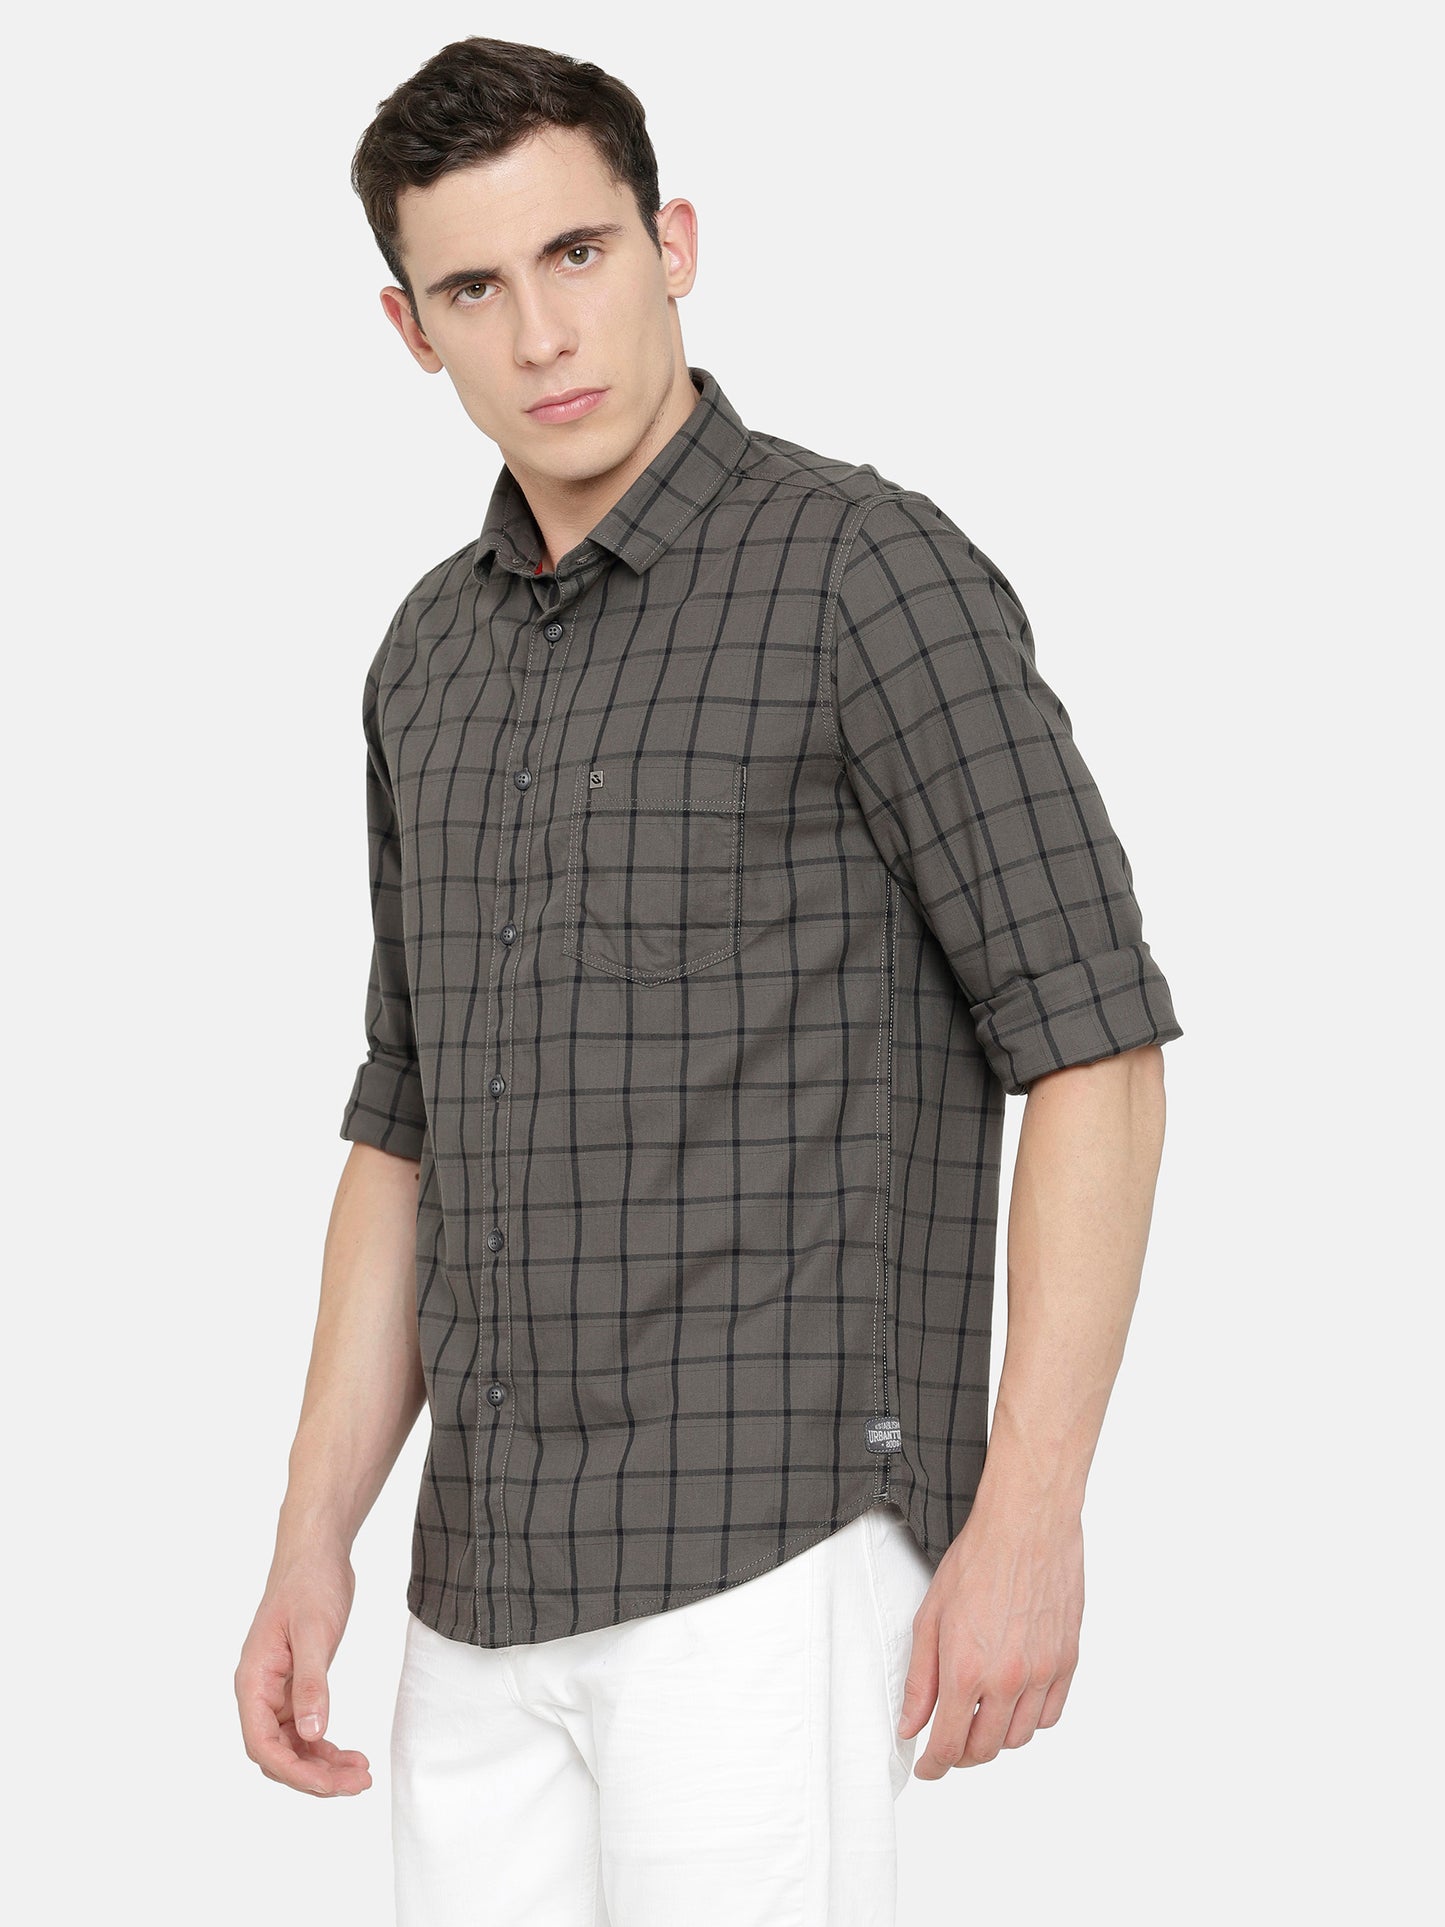 Grey Checkered Shirt